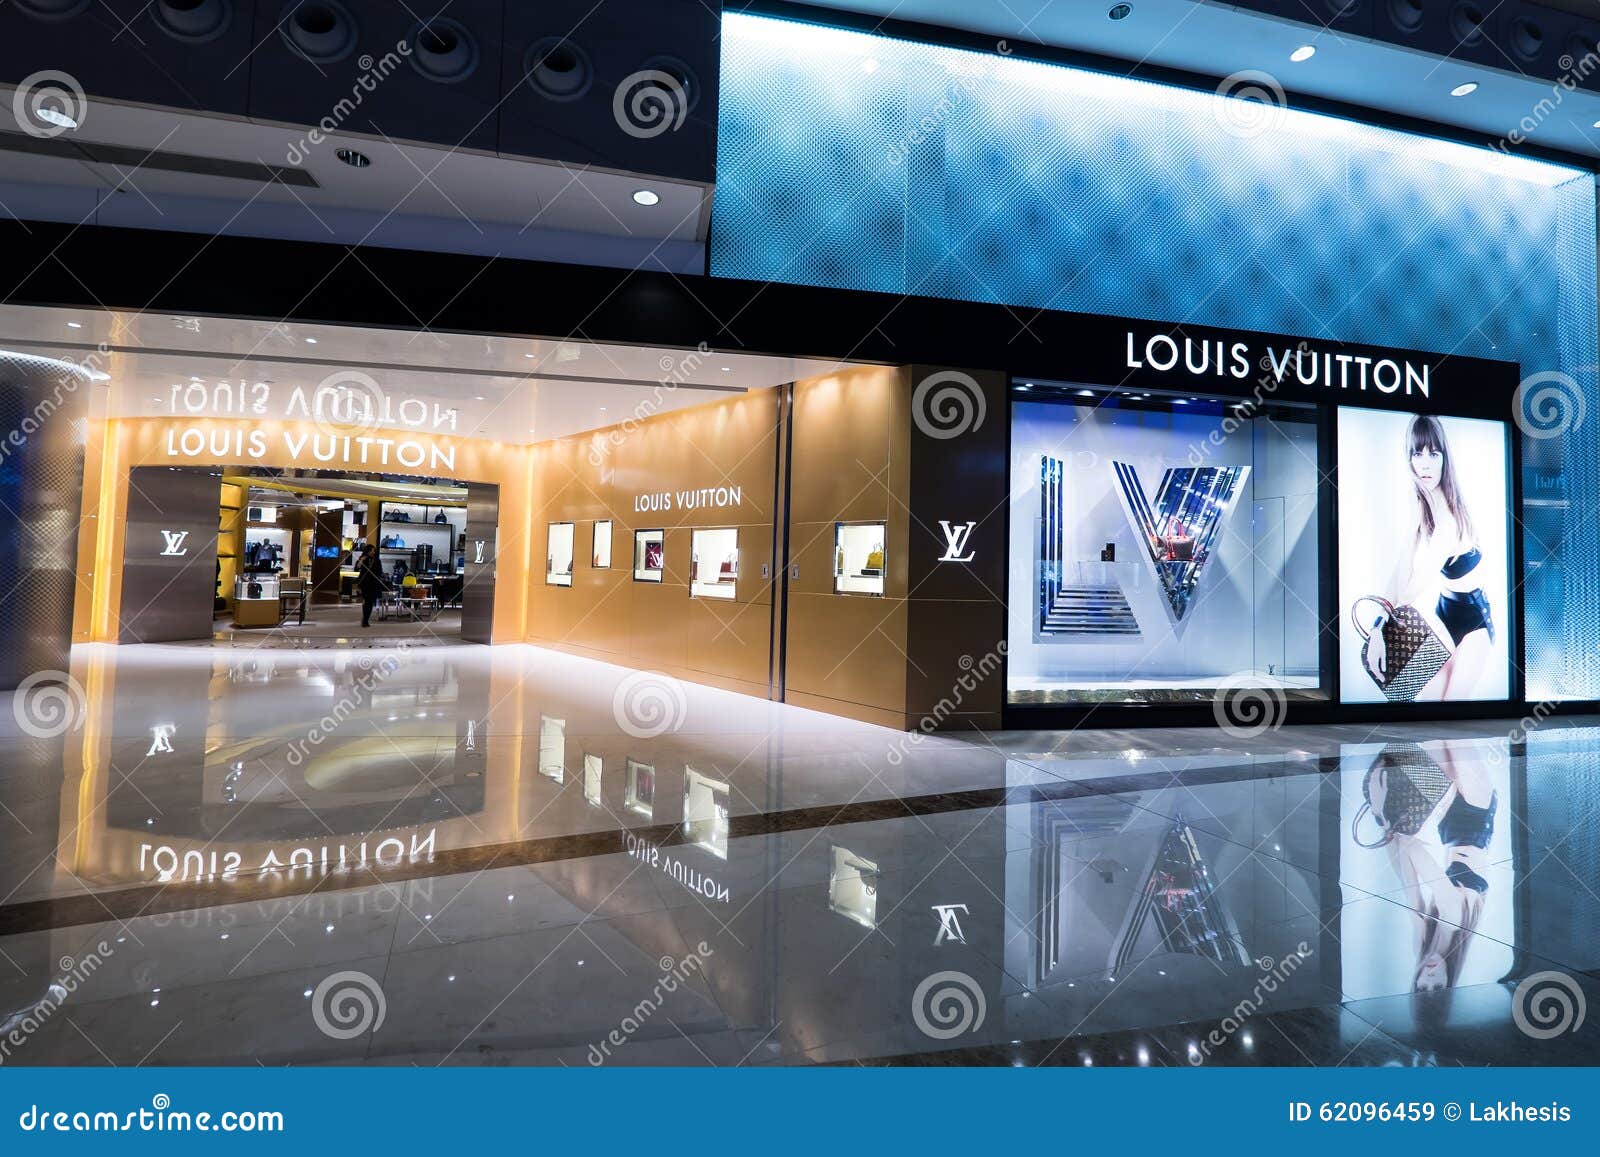 Louis Vuitton Pacific Place Hong Kong reopens - Luxurylaunches